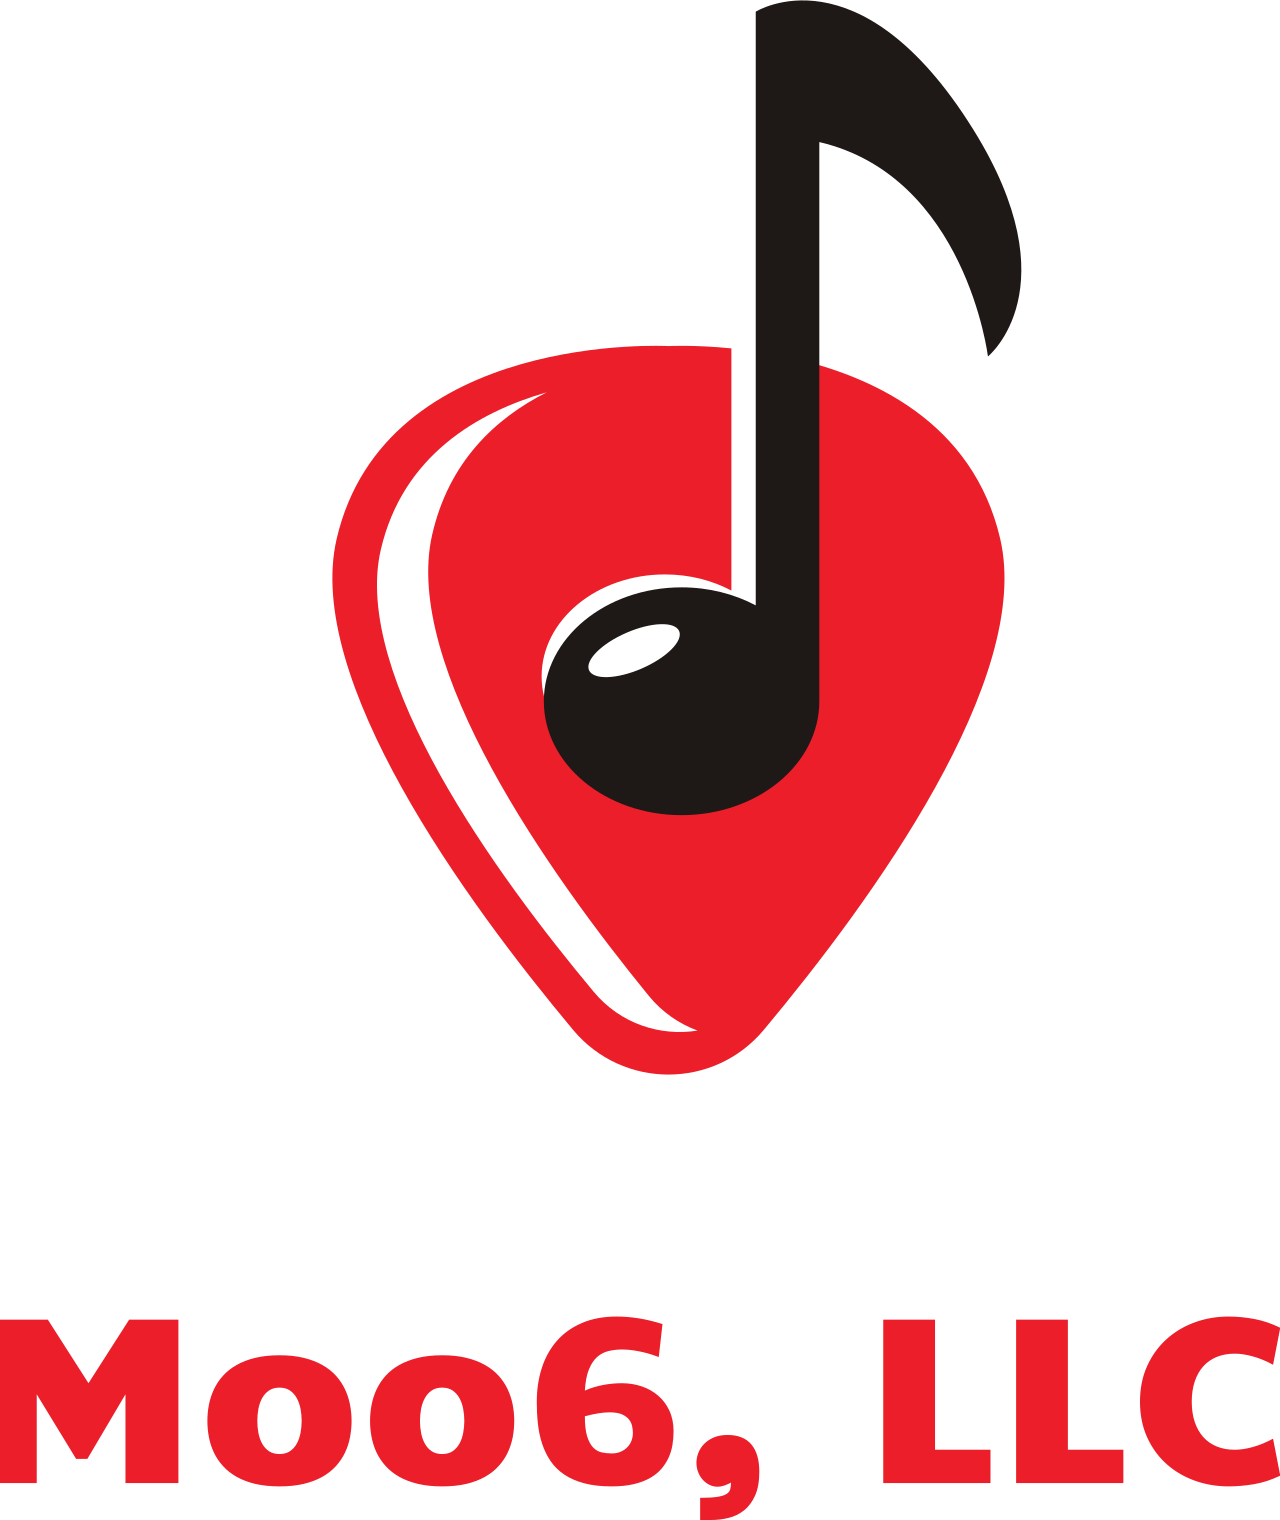 Moo6, LLC 's web page